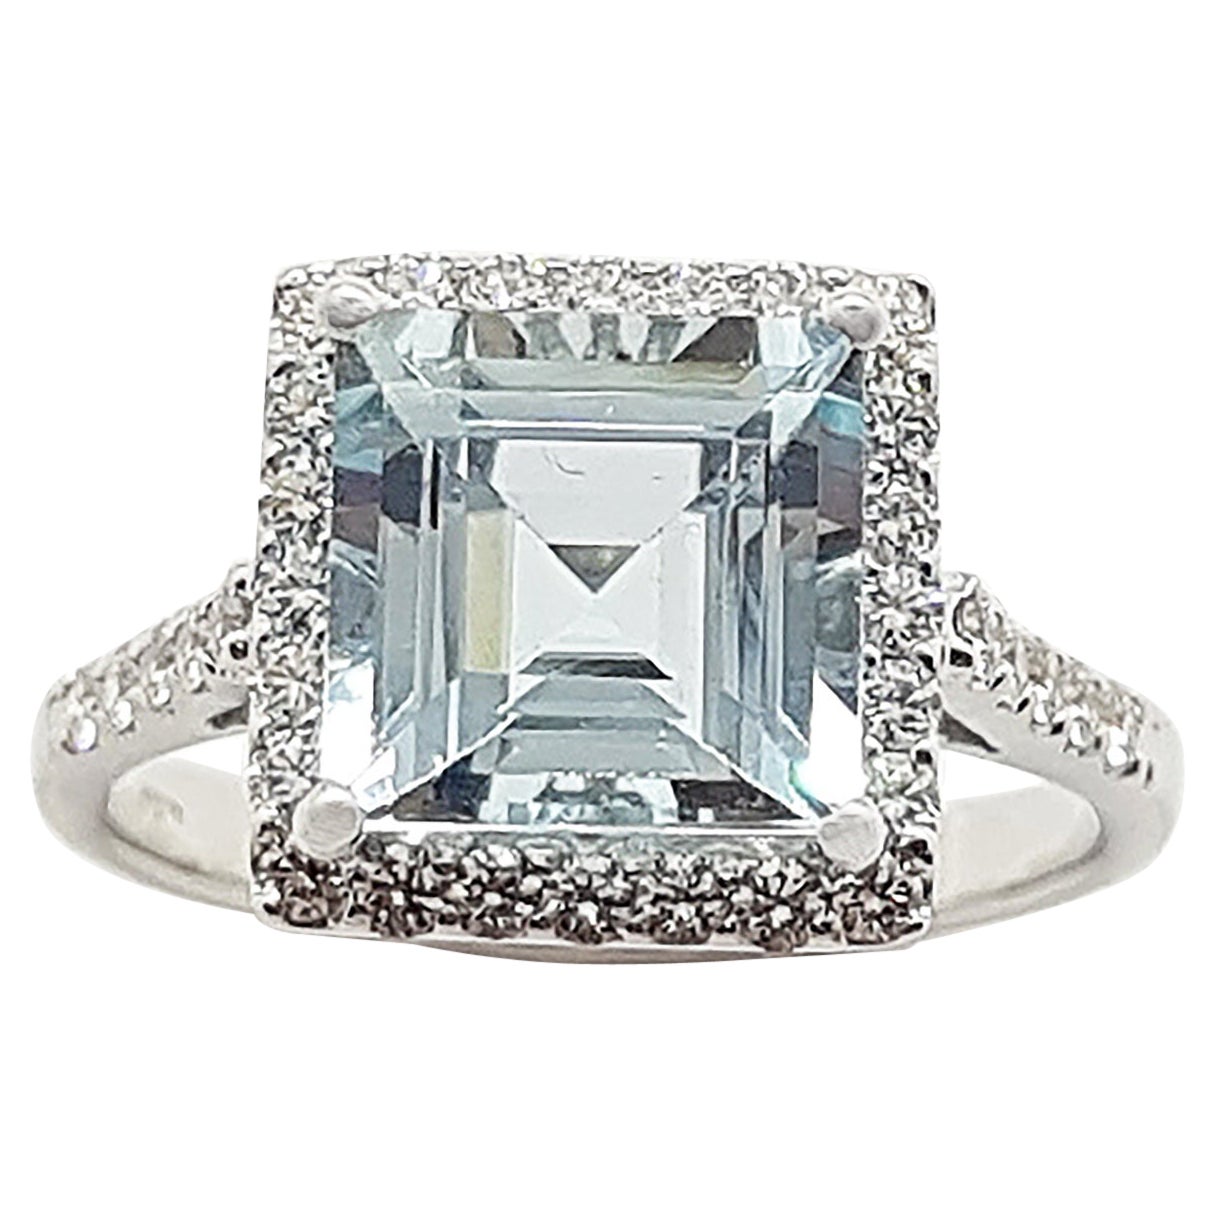 Aquamarine with Diamond Ring Set in 18 Karat White Gold Settings